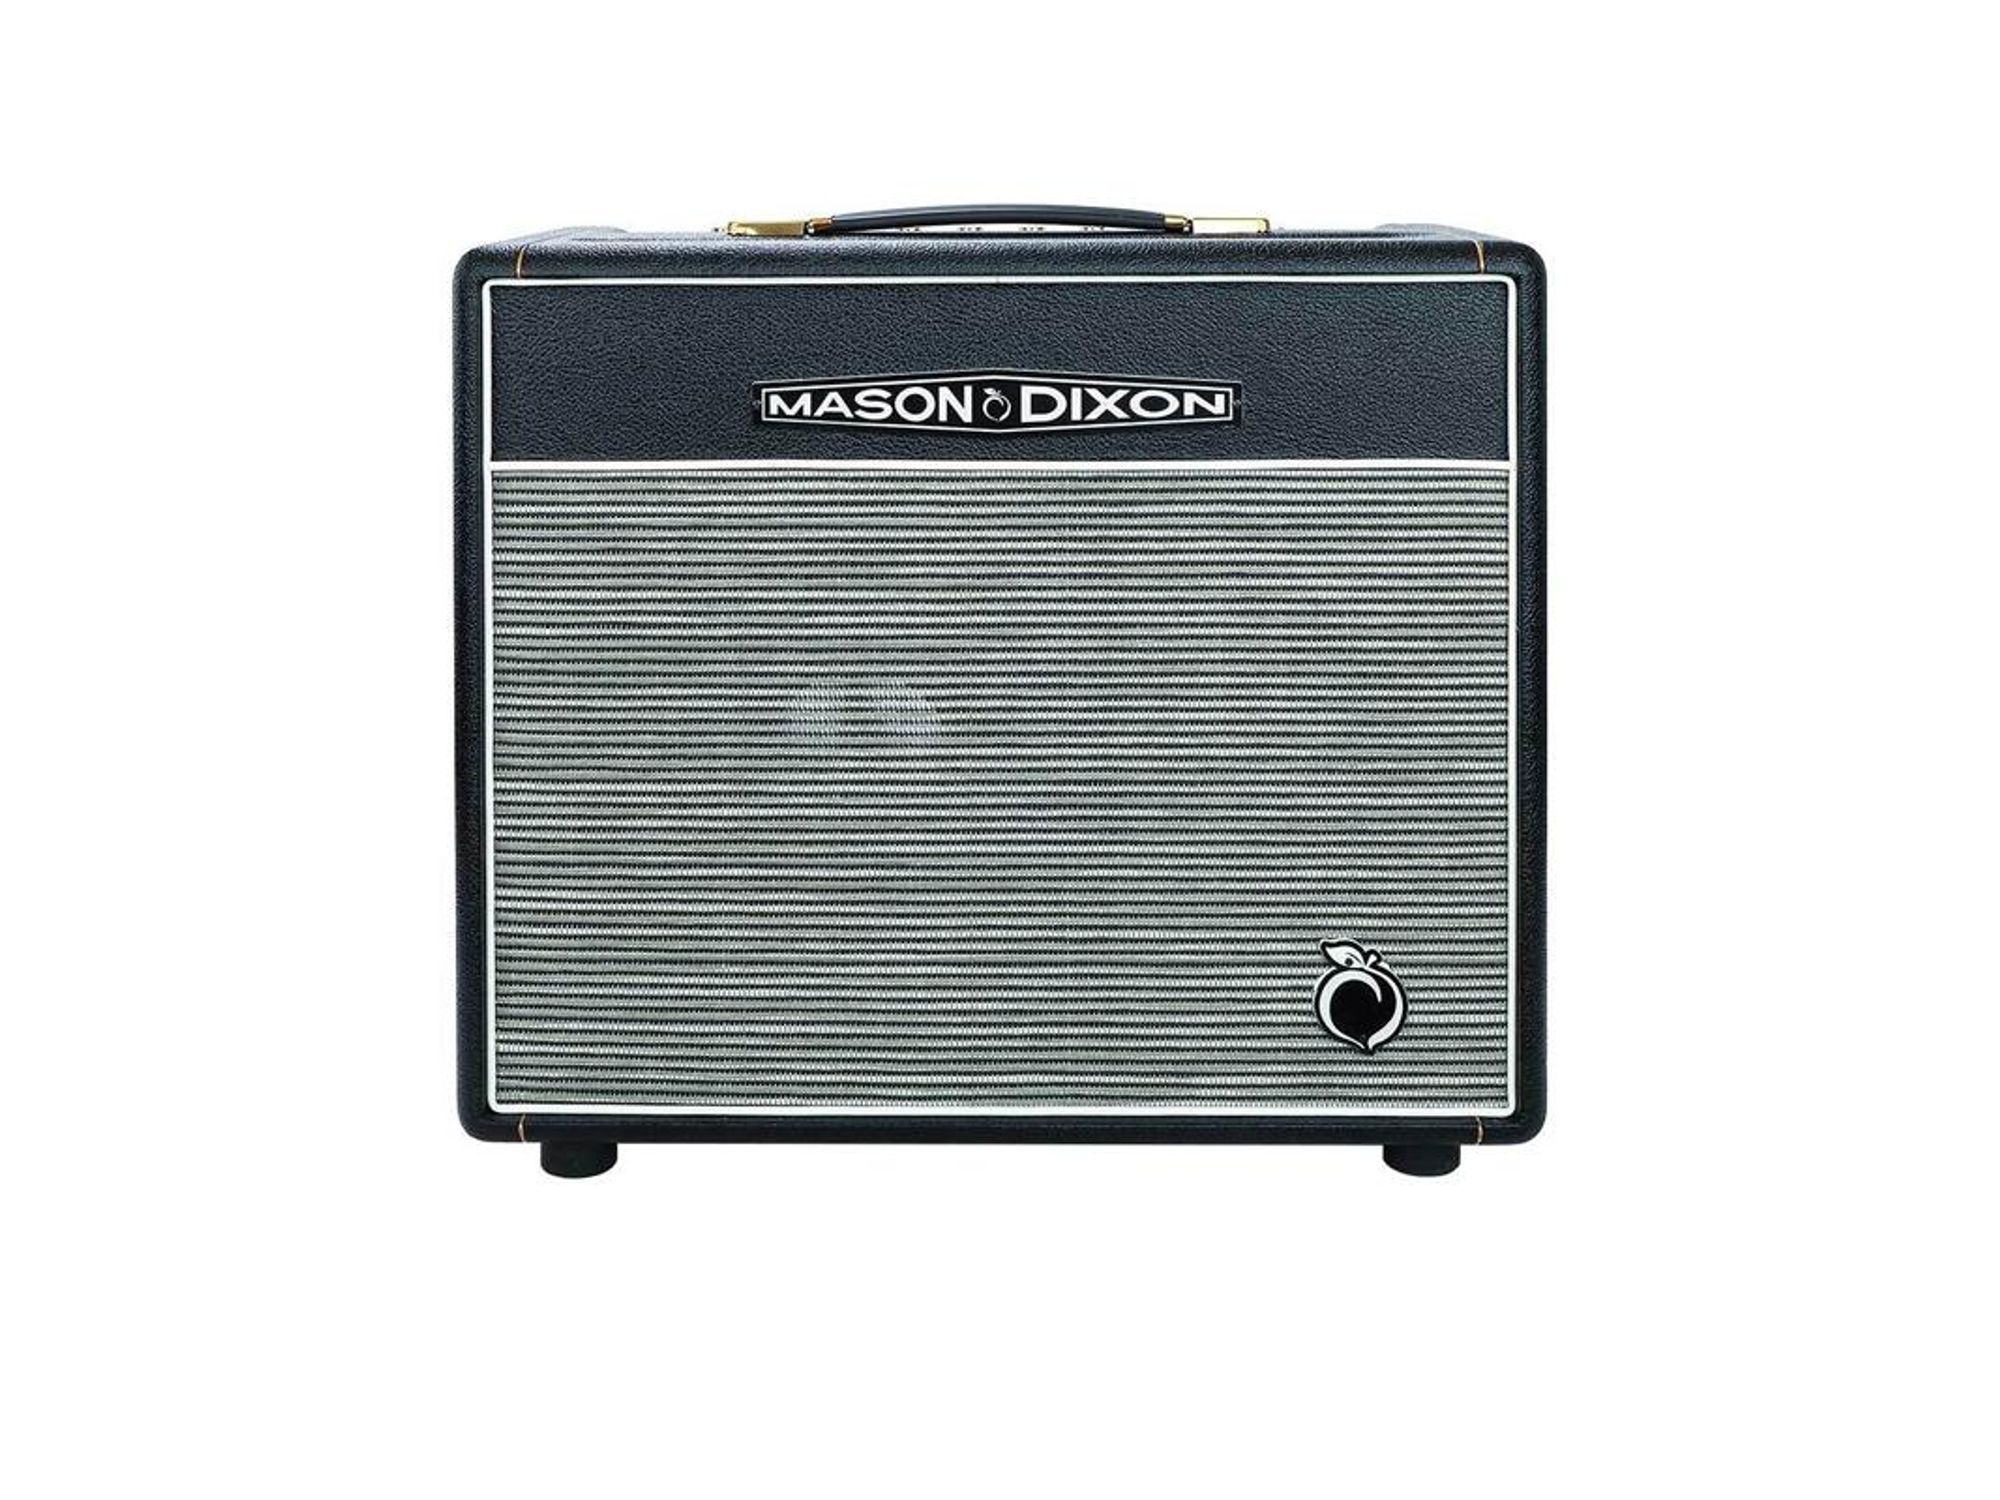 Mason Dixon Amplifiers Unveils a 15-Watt Version of Fillmore East Edition Amplifier